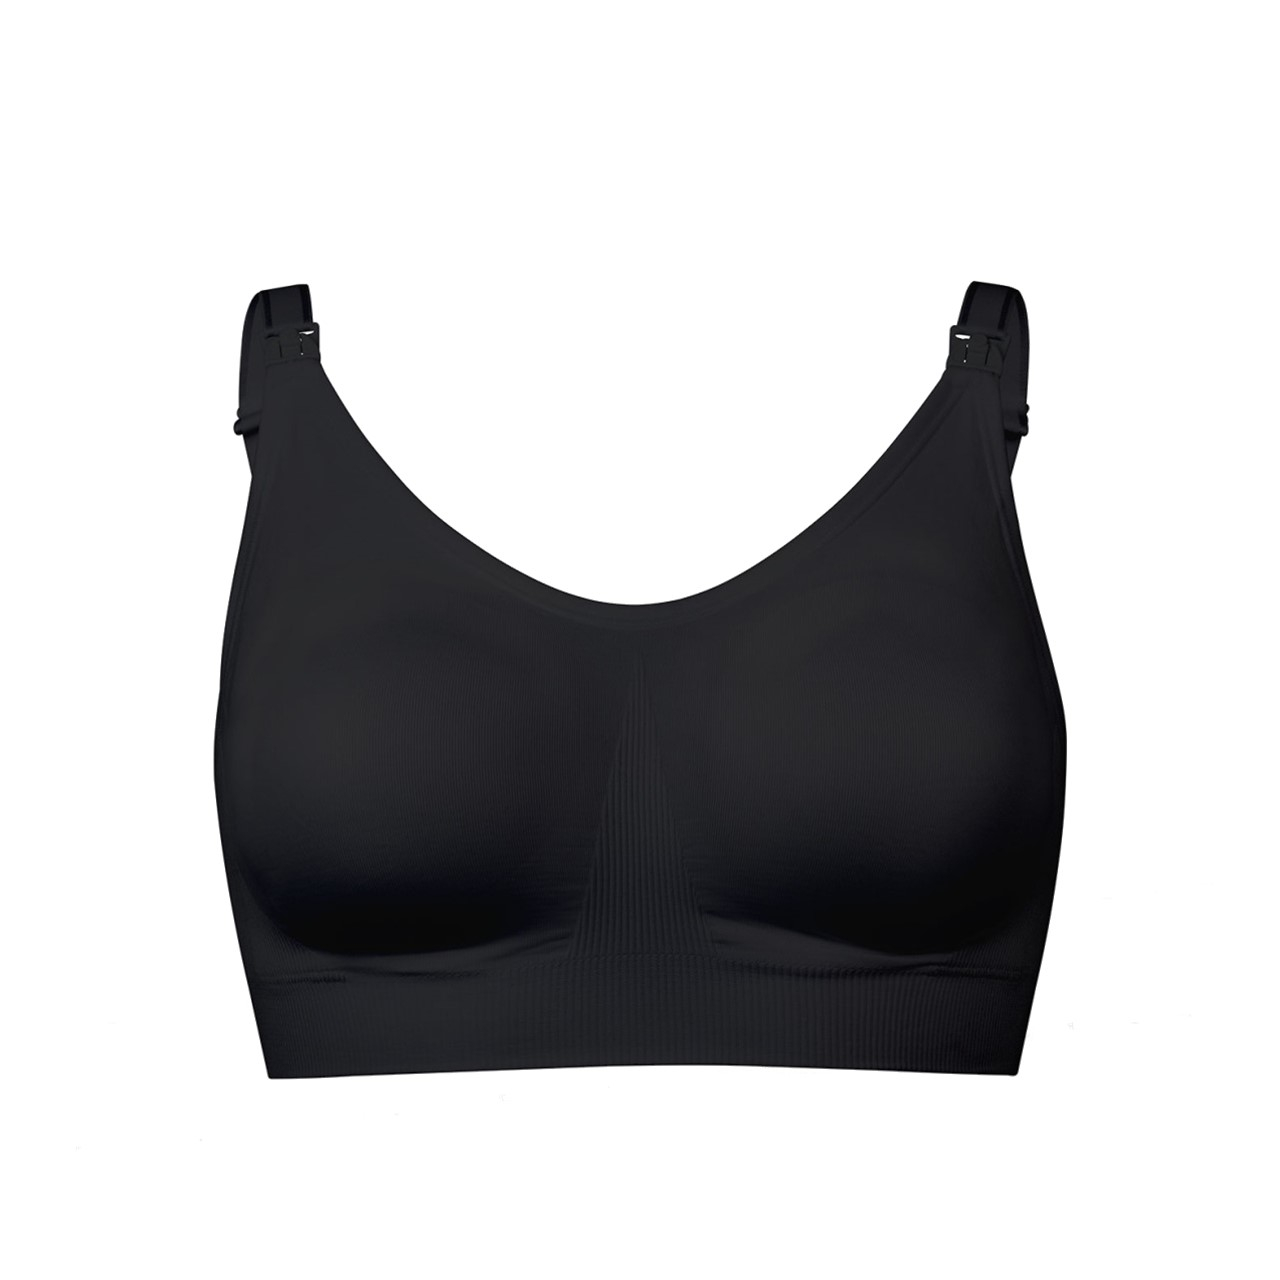 https://static.beautytocare.com/media/catalog/product/m/e/medela-ultimate-bodyfit-bra-black-large-size-x1.jpg